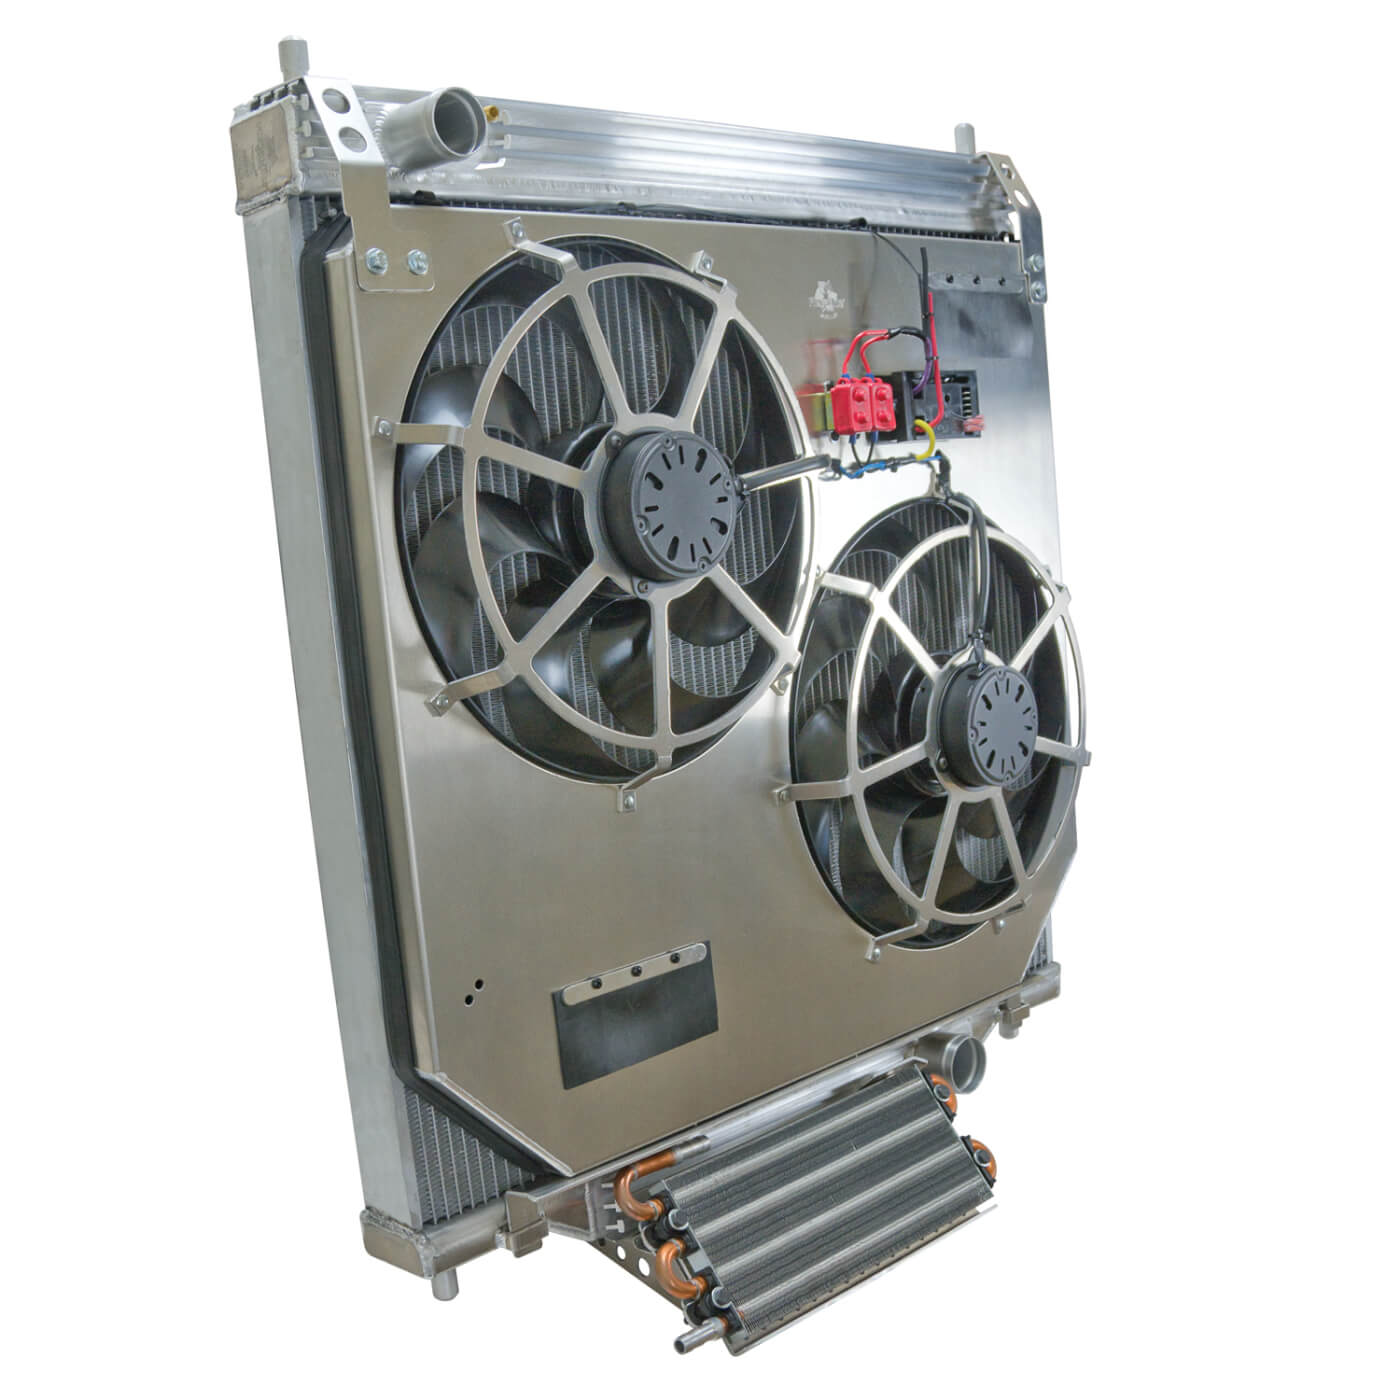 Flex-a-lite Aluminum Radiator and Dual-electric Fan System 